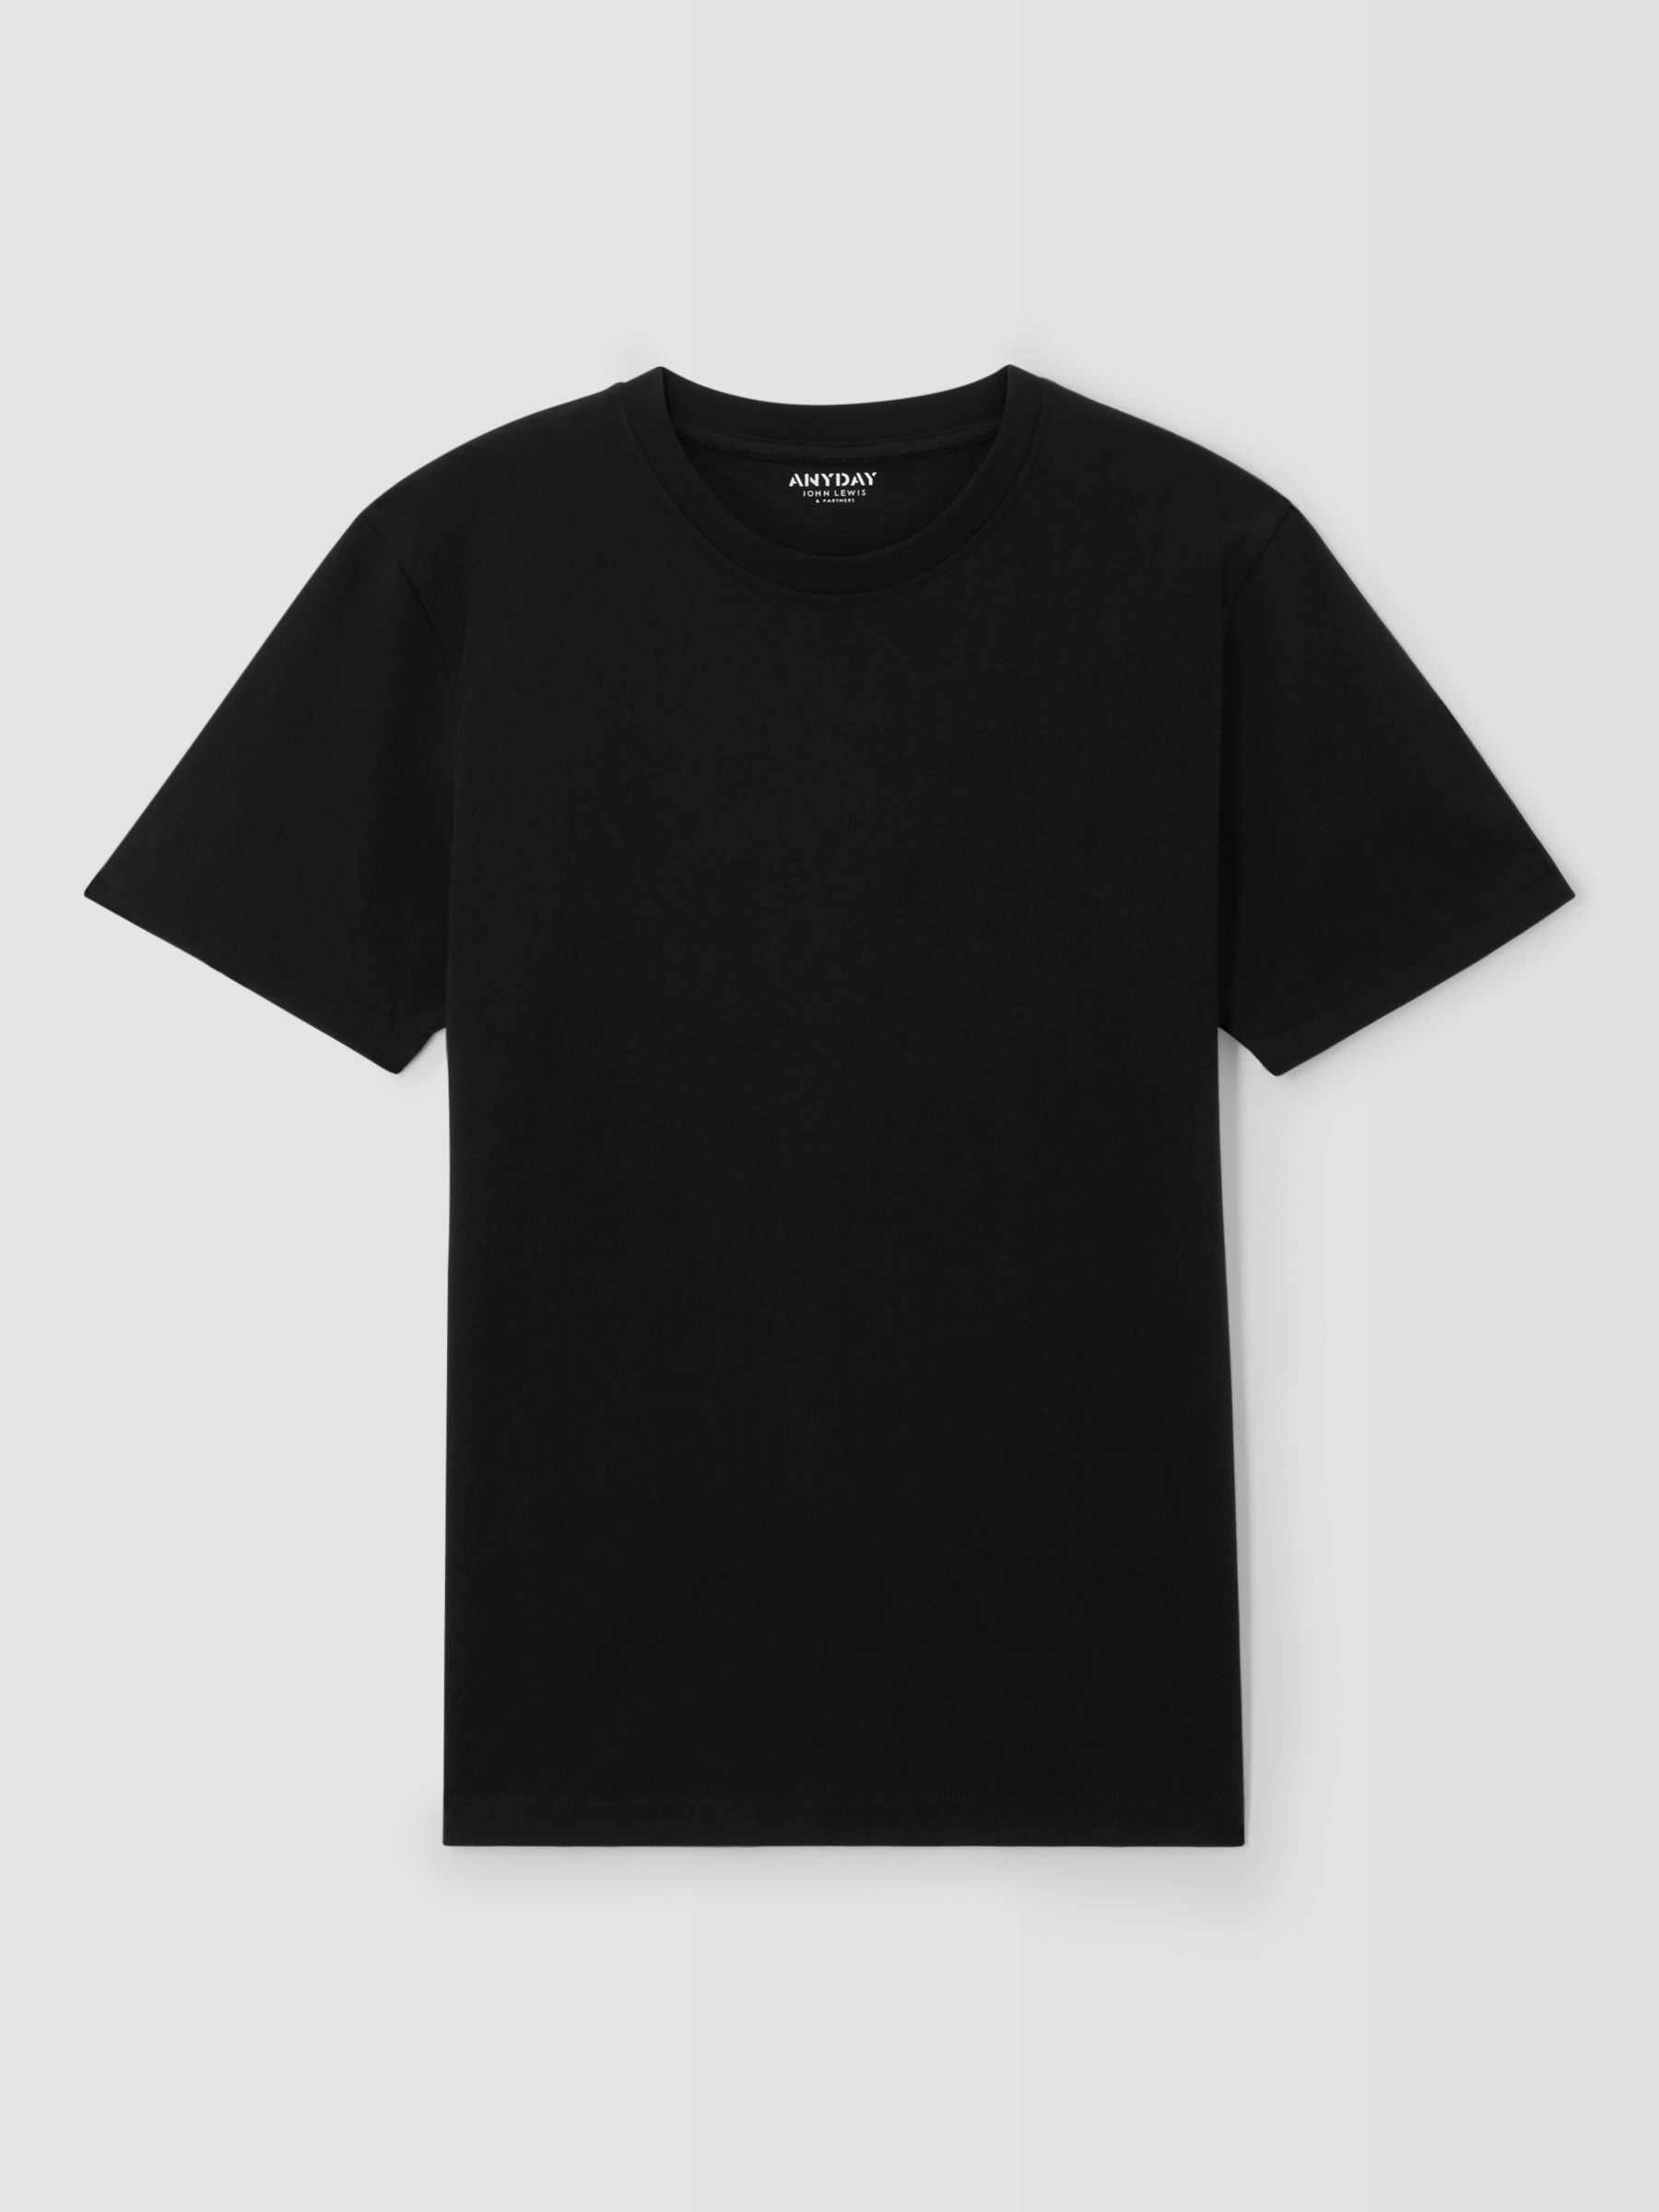 John Lewis ANYDAY Cotton Crew Neck T-Shirt, Black, S